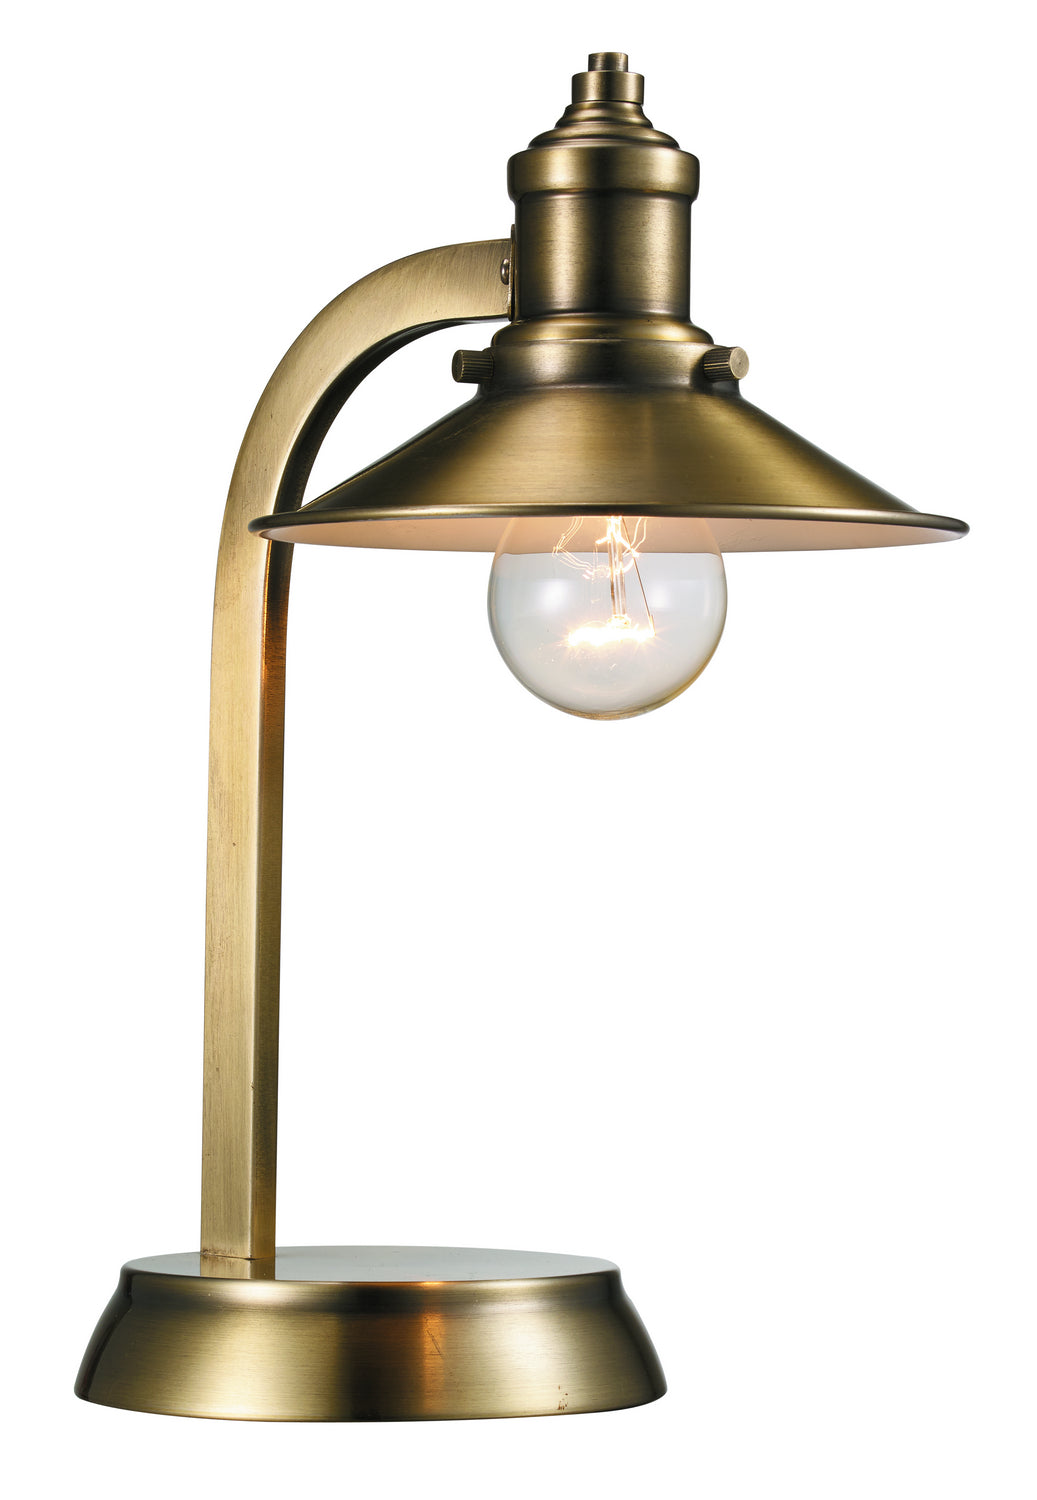 Trans Globe Imports RTL-8986 AB Liberty One Light Table Lamp Lamp Brass - Antique